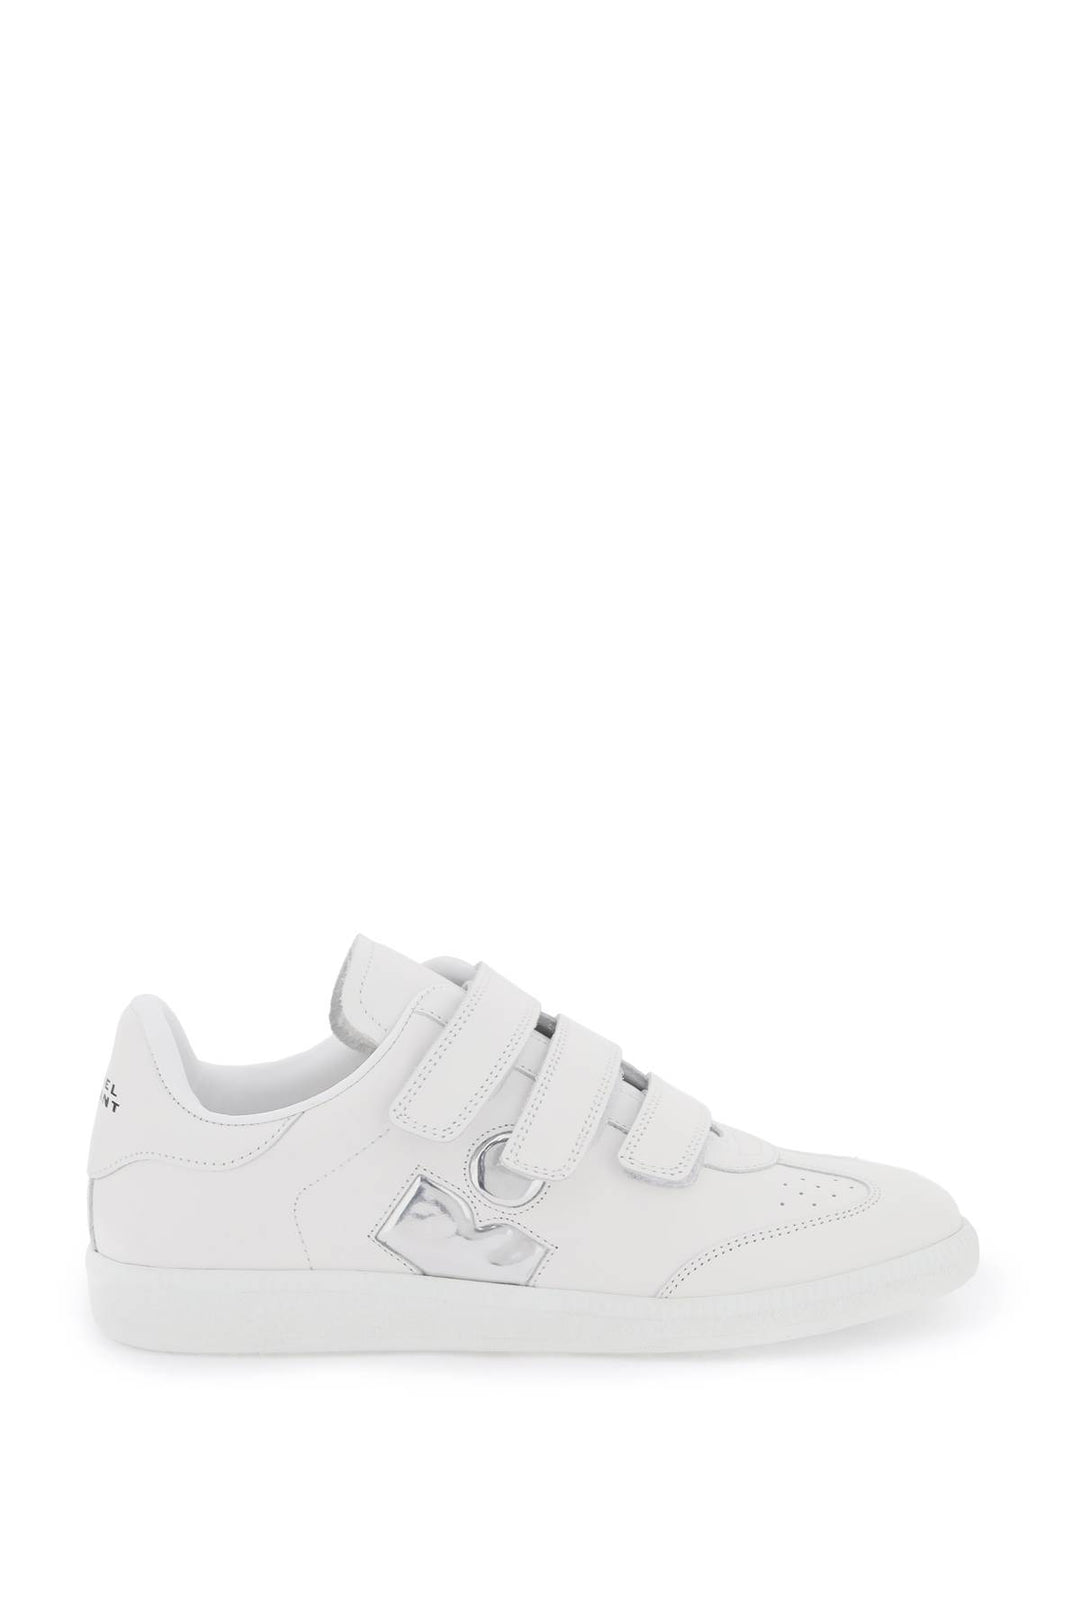 Isabel Marant Etoile Beth Leather Sneakers   Bianco